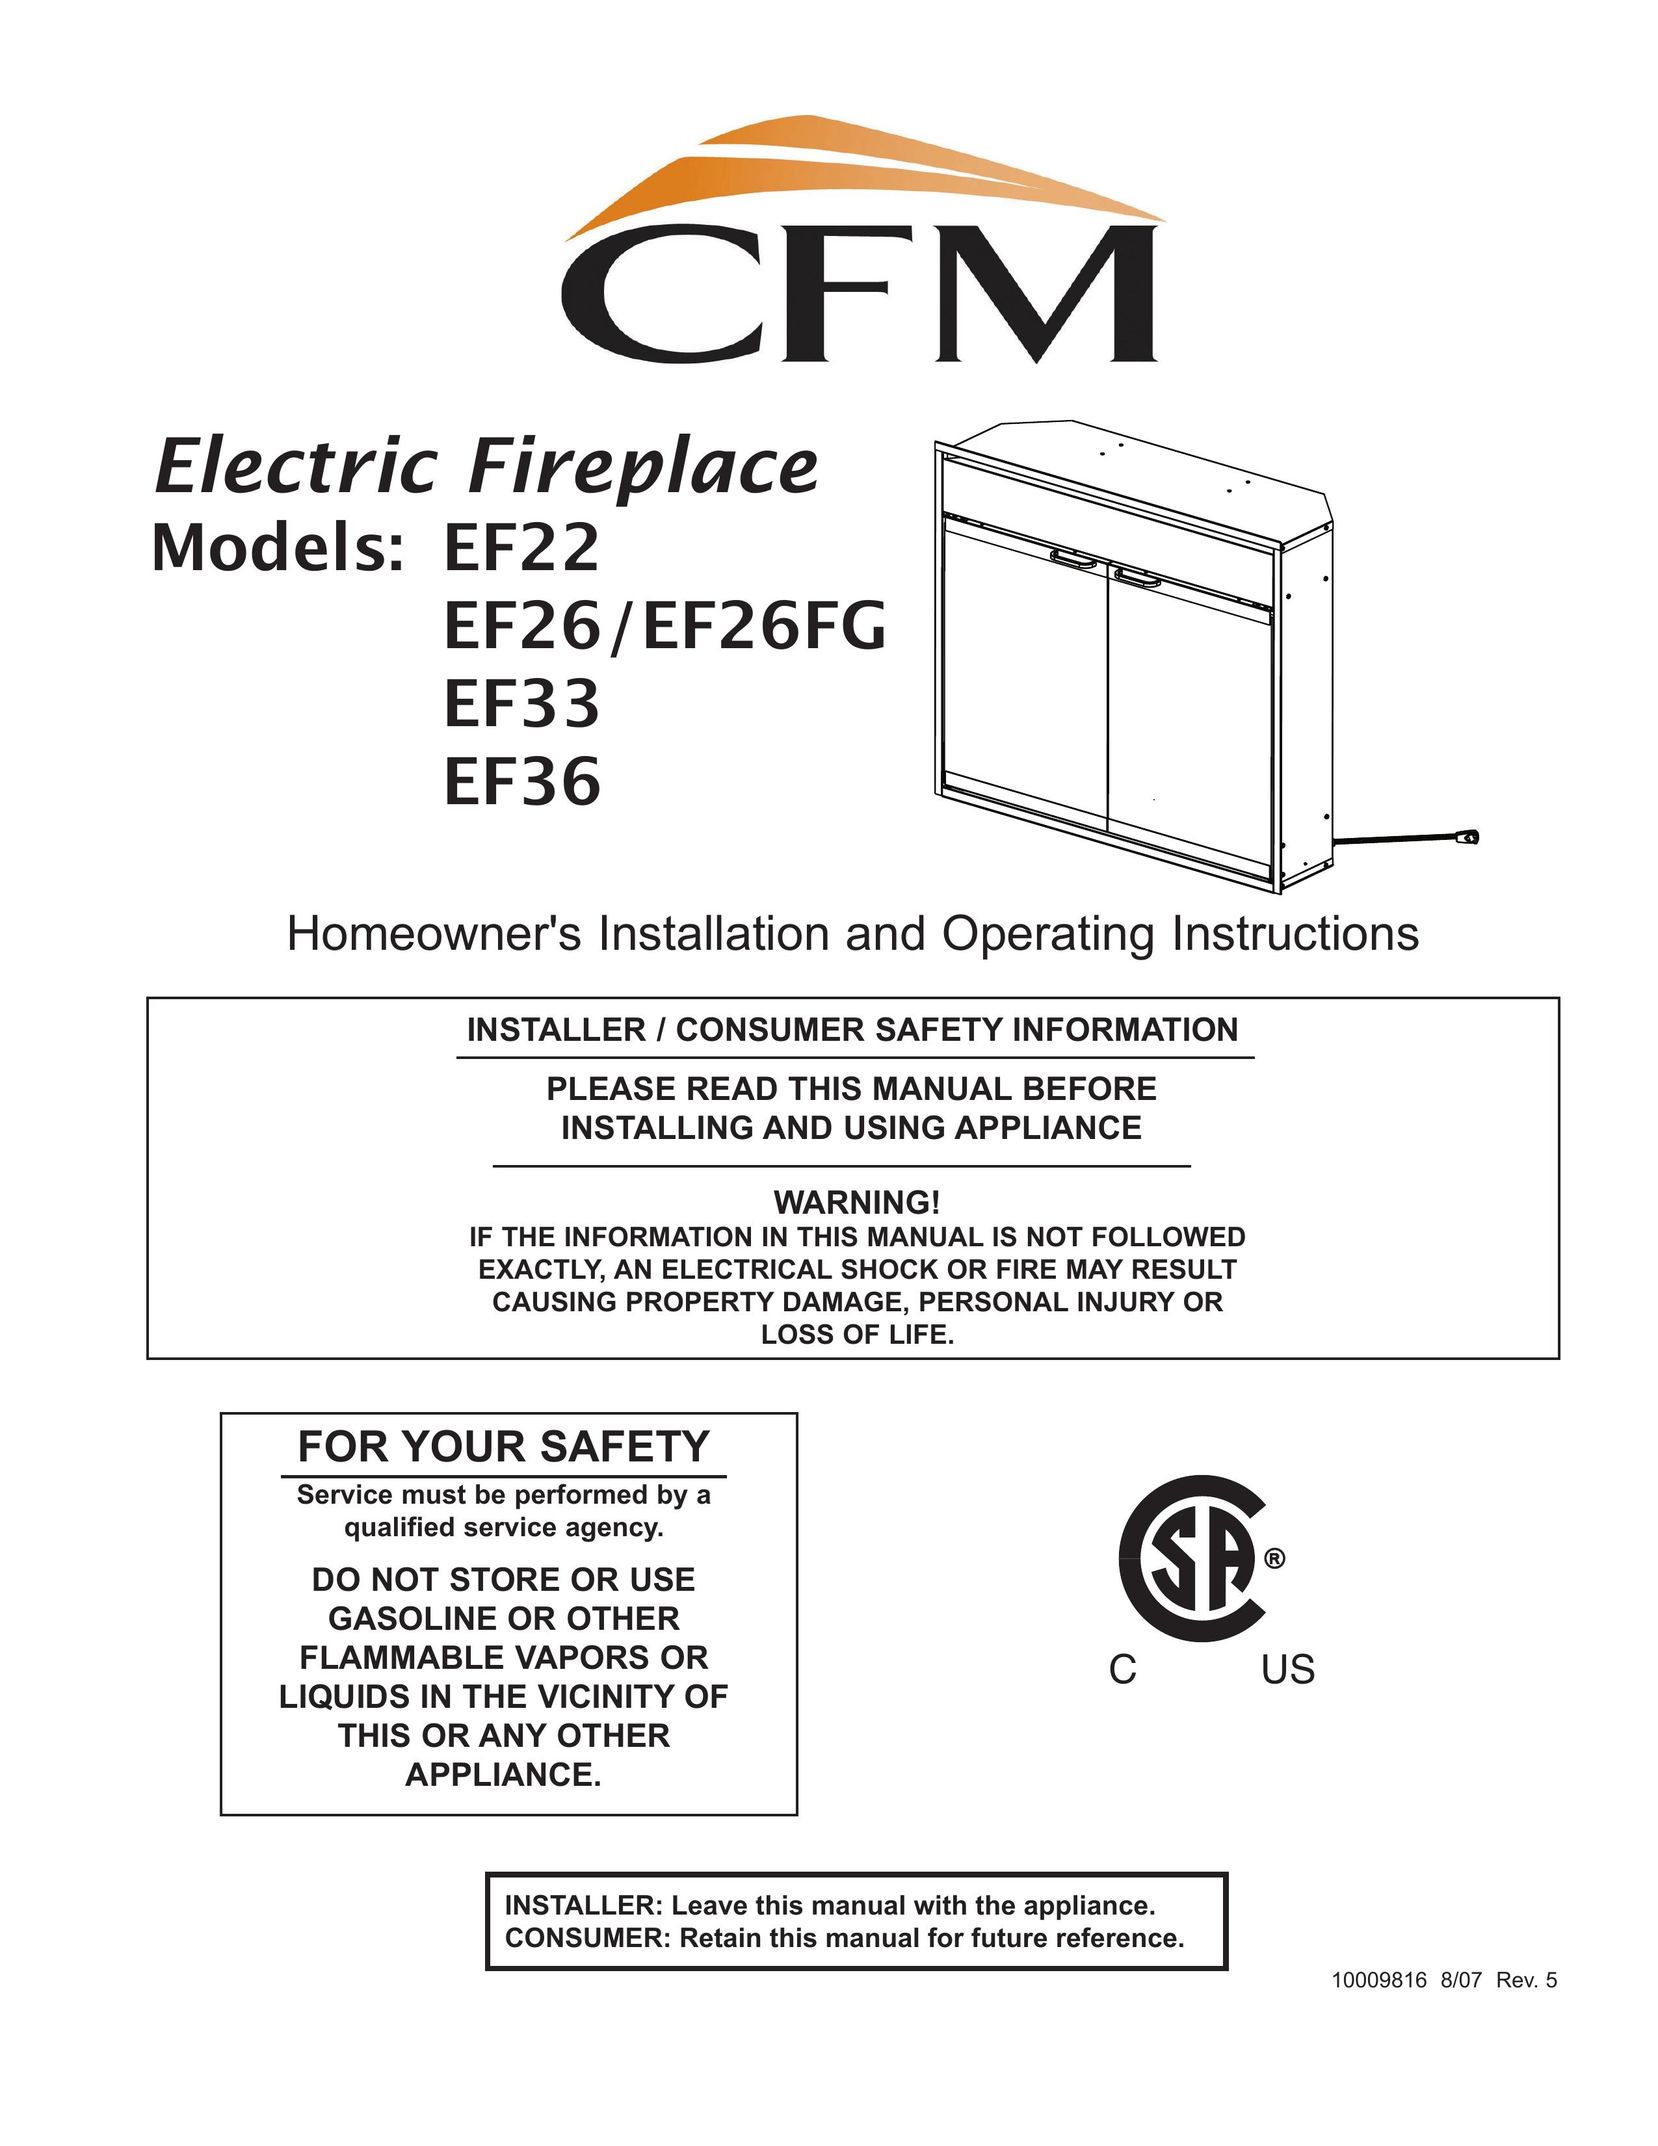 CFM Corporation EF22 Indoor Fireplace User Manual